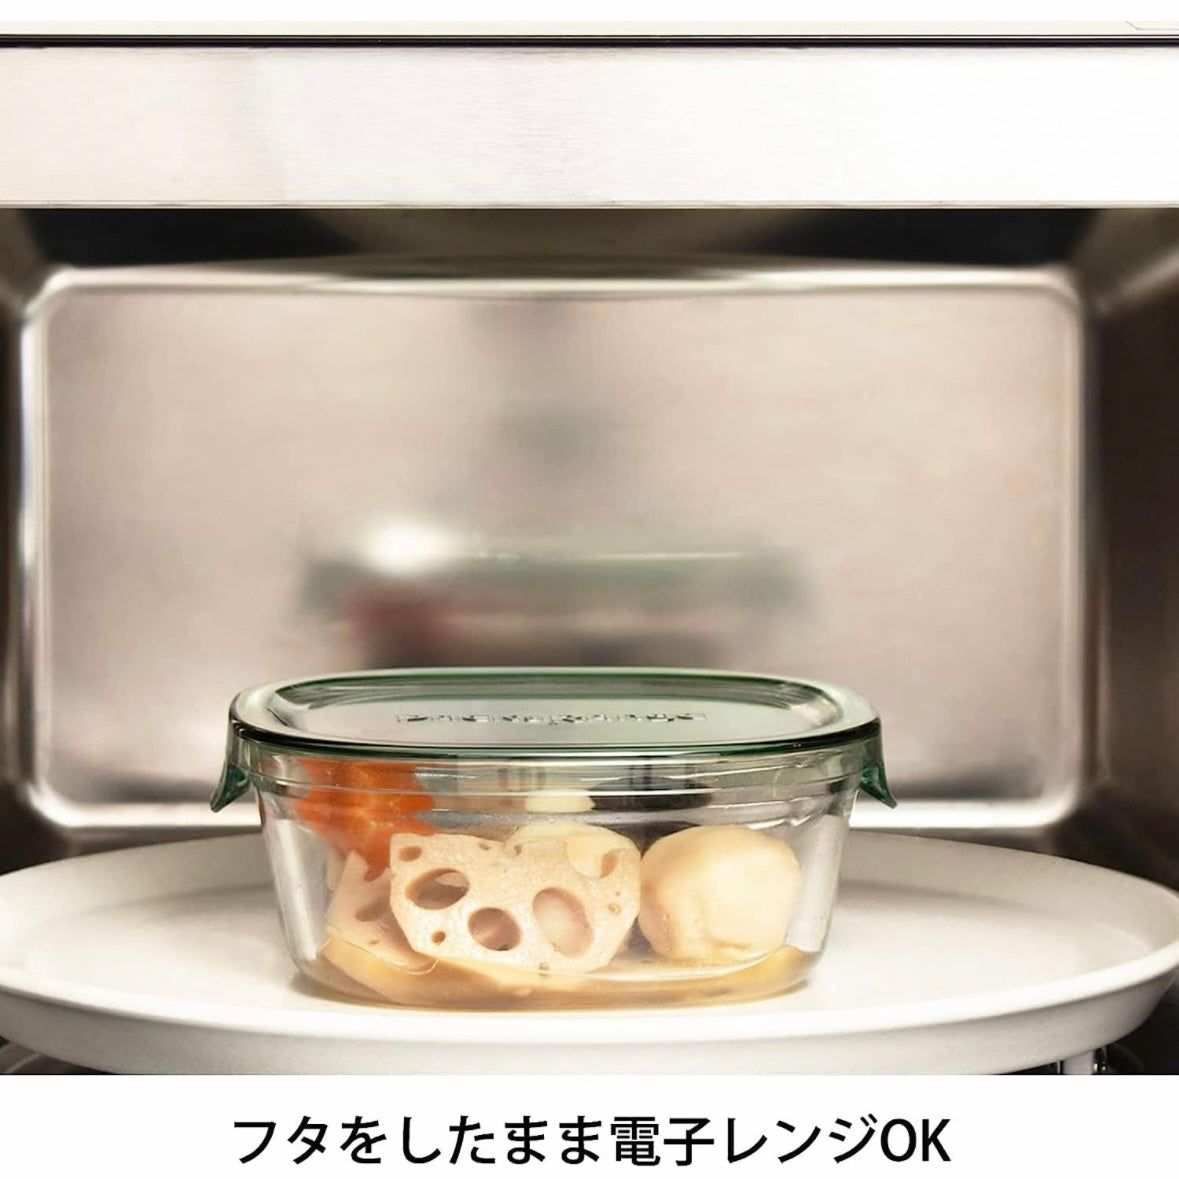 iwaki イワキ 耐熱ガラス 保存容器 角型3点セット クールグレー M(800ml)×1個、S(450ml)×1個、SS(200ml)×1個 食洗機 電子レンジ オーブン